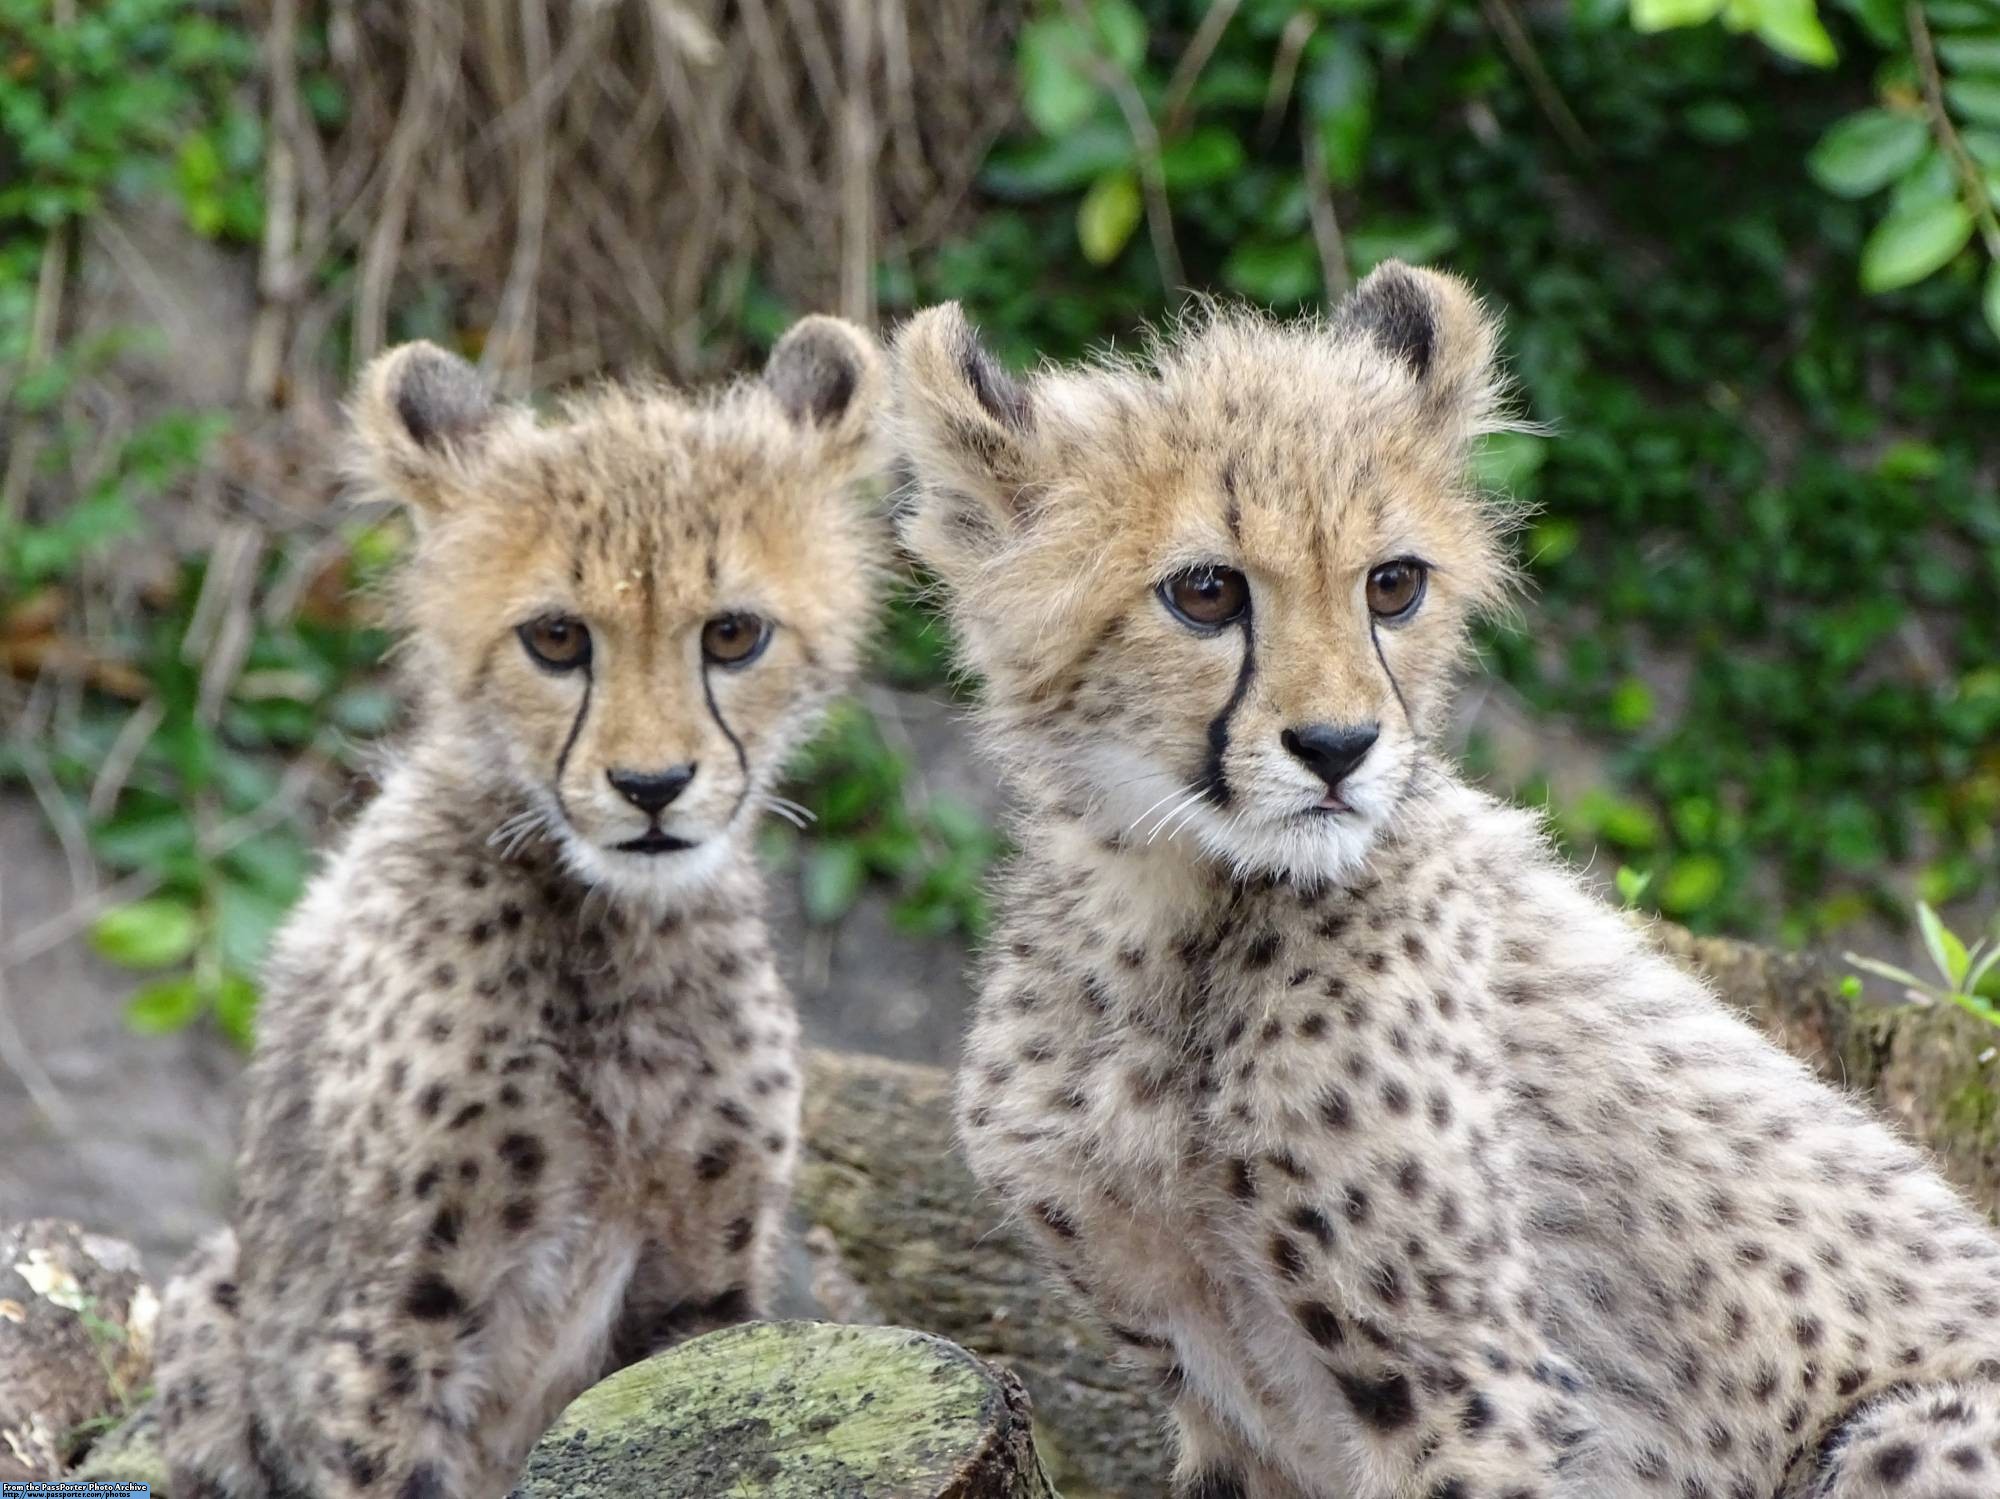 Busch Gardens - cheetah cubs